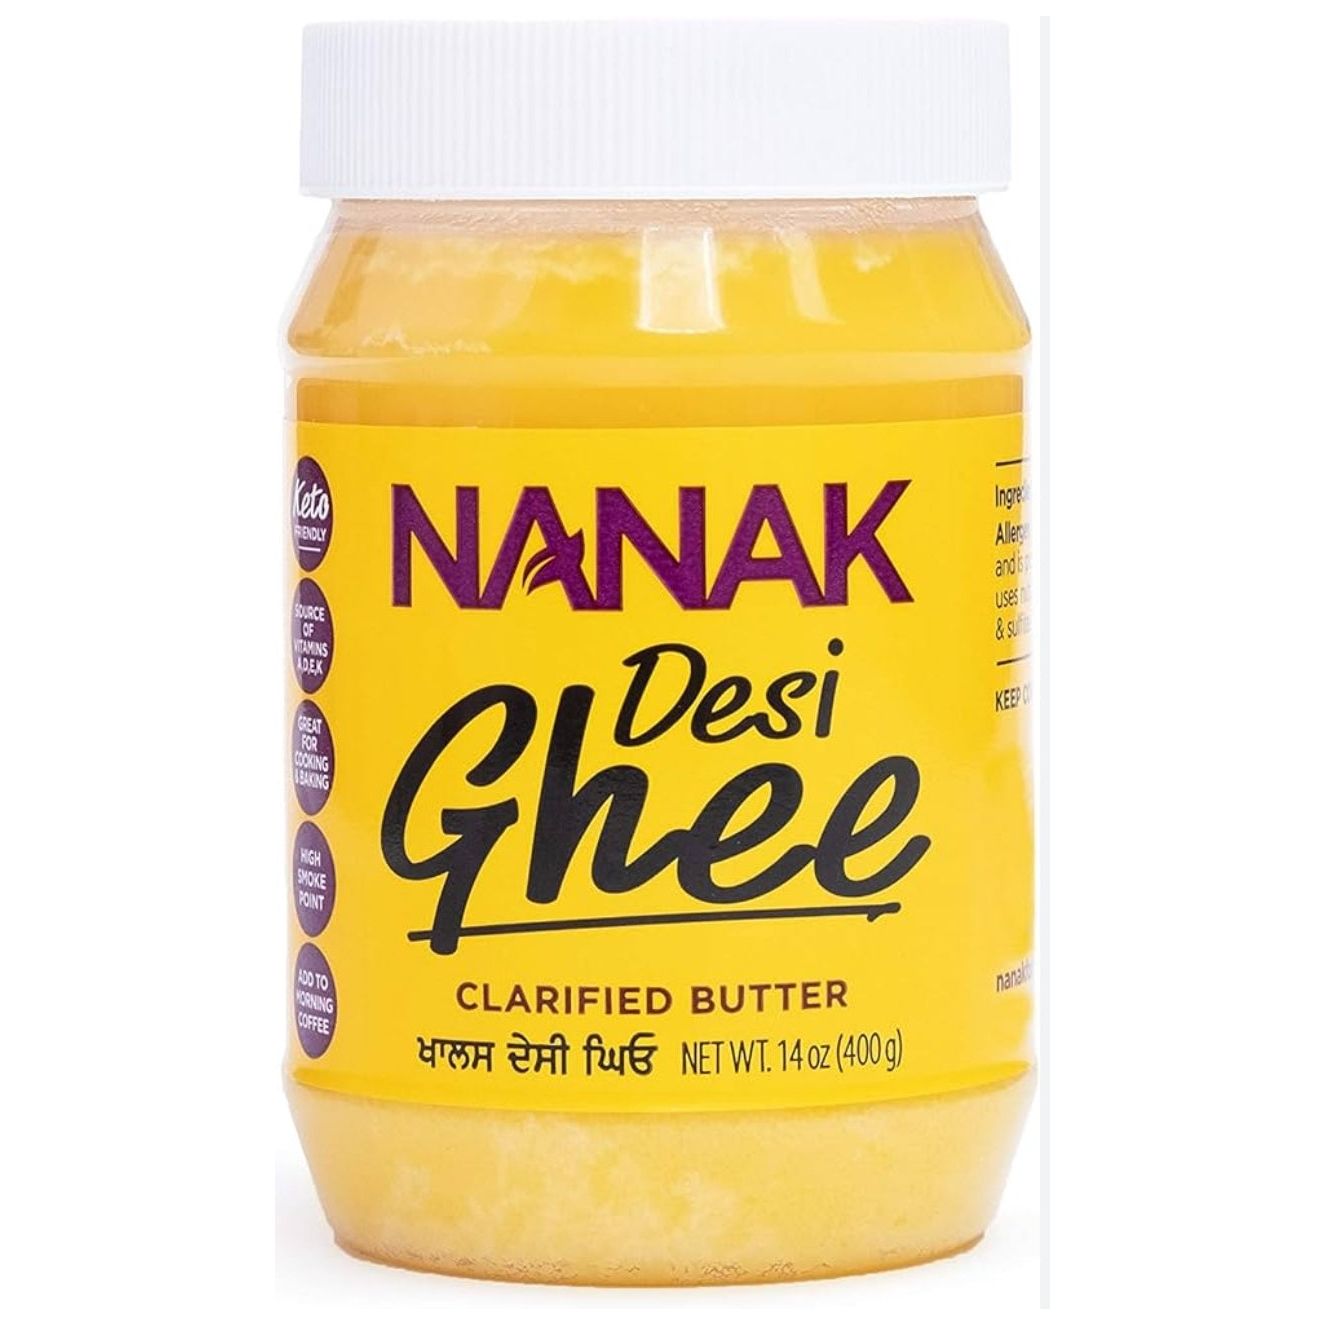 Nanak Desi Ghee Clarified Butter 400g